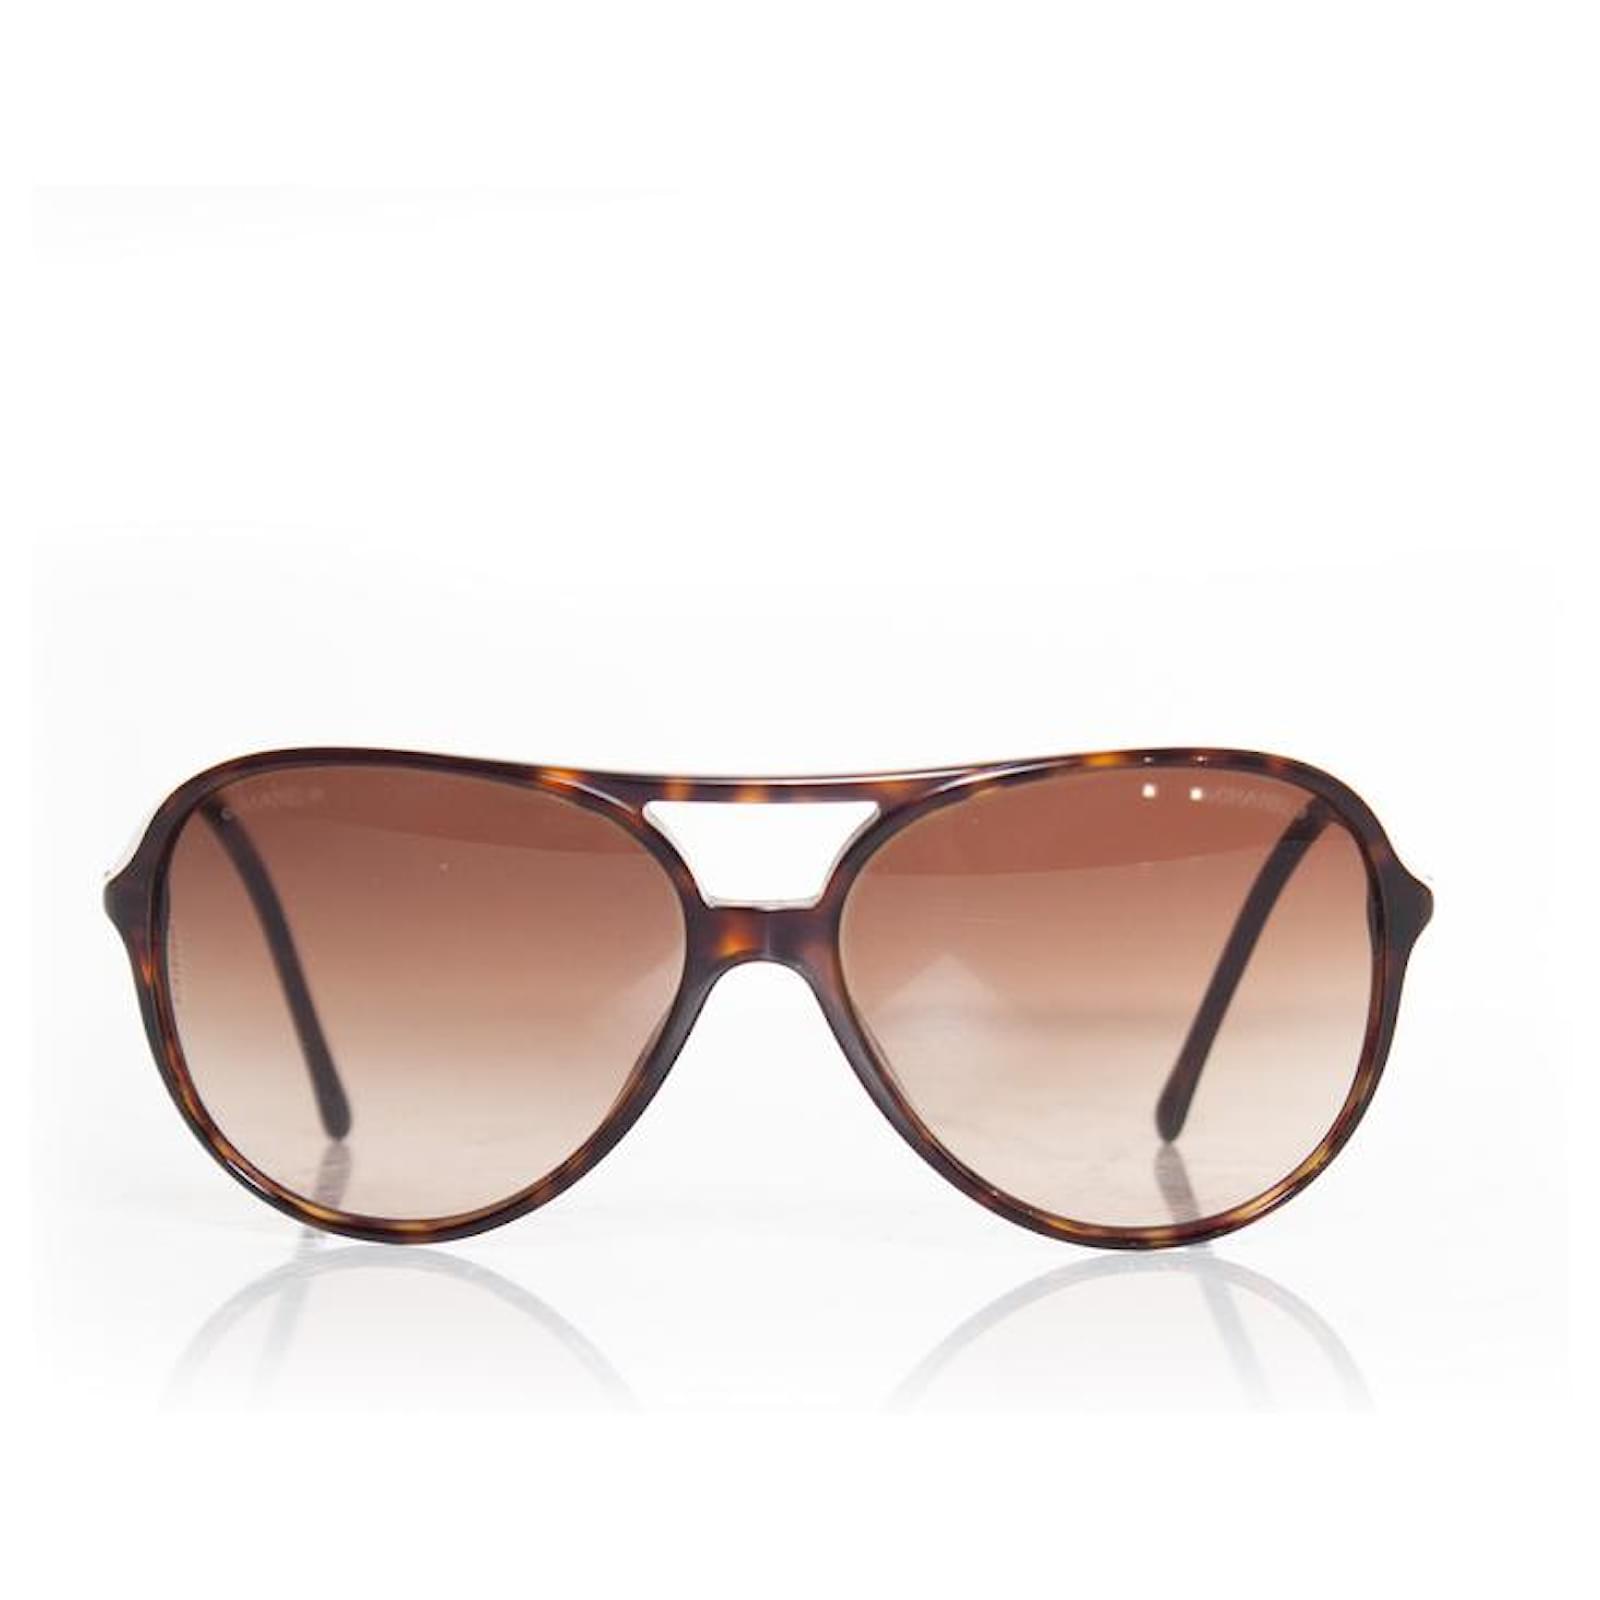 Buy Silver Sunglasses for Men by CLARK N PALMER Online | Ajio.com